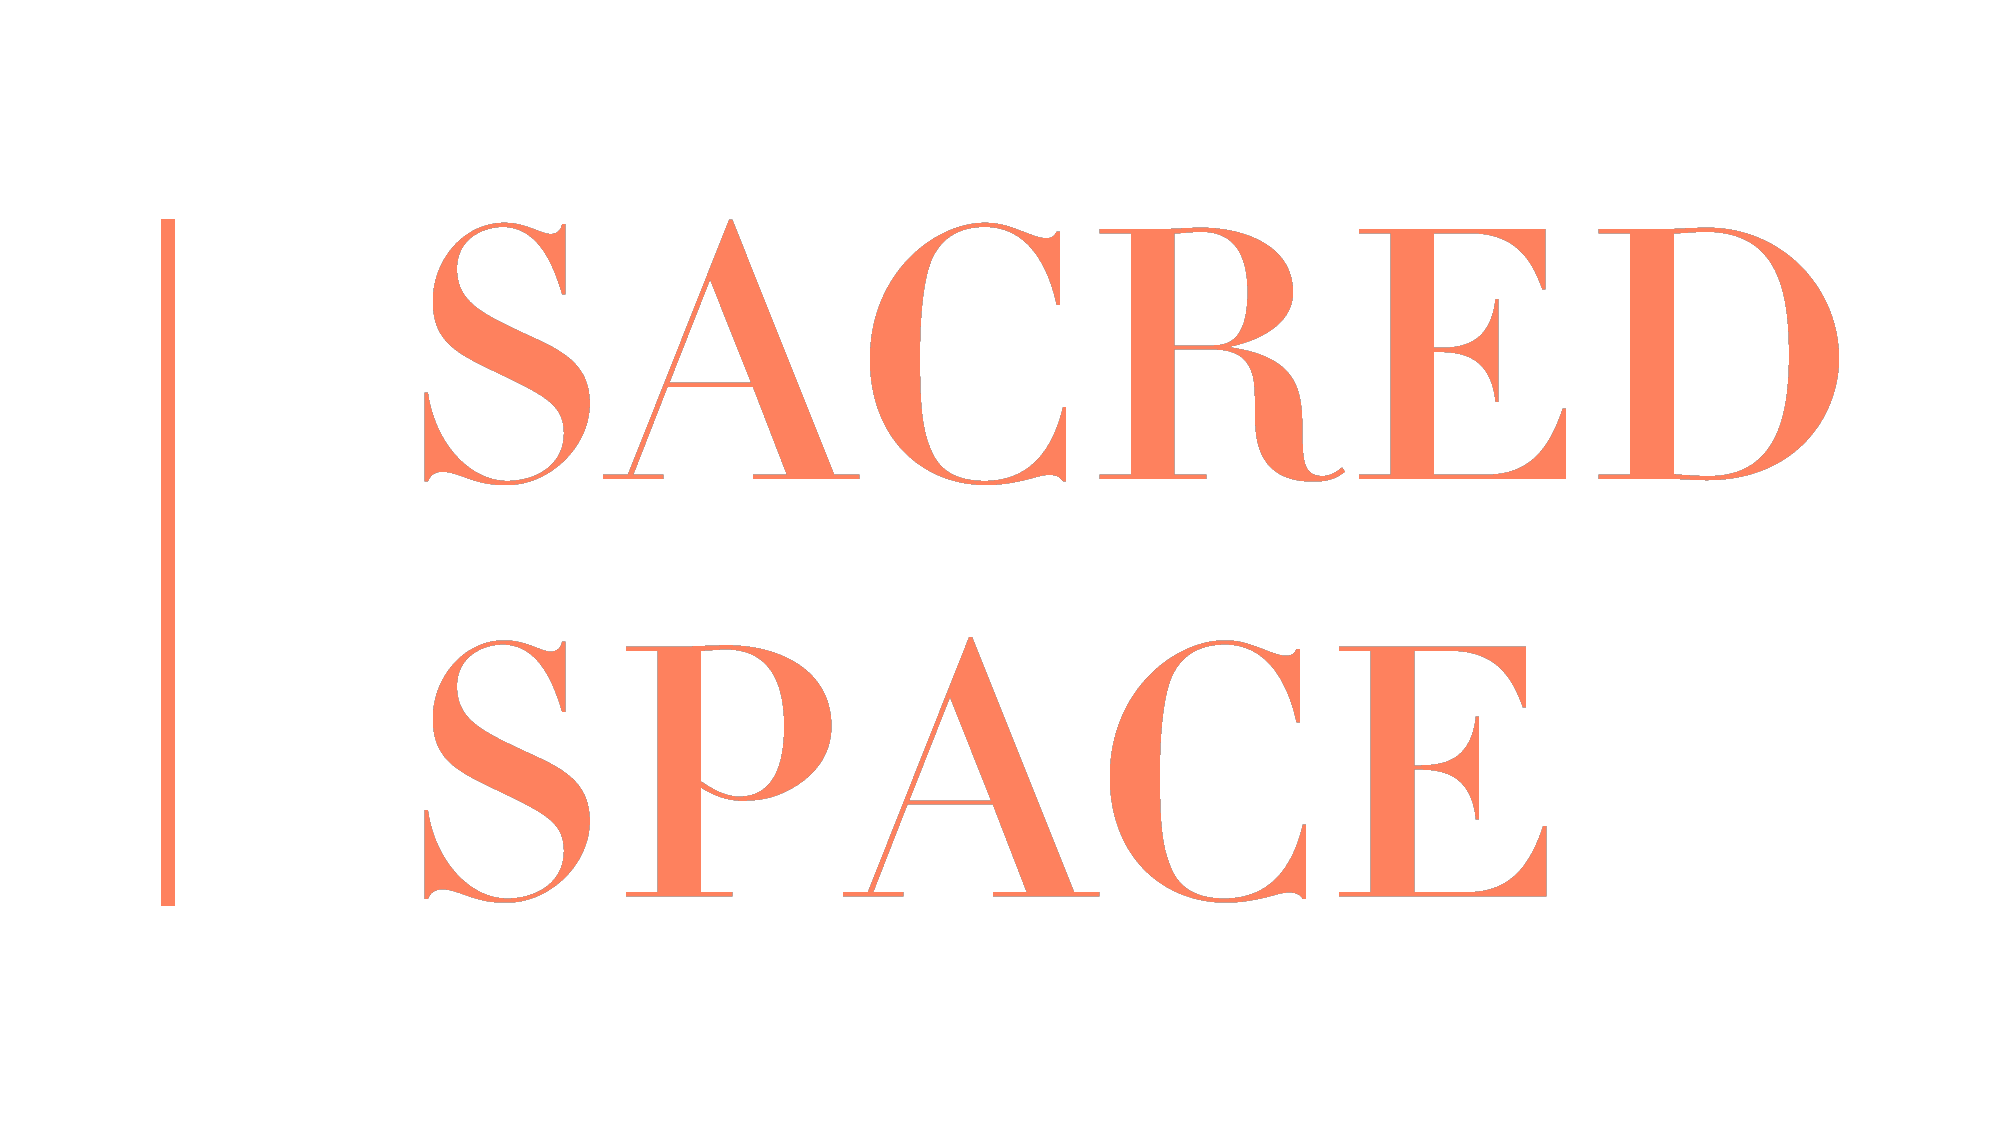 SACRED SPACE